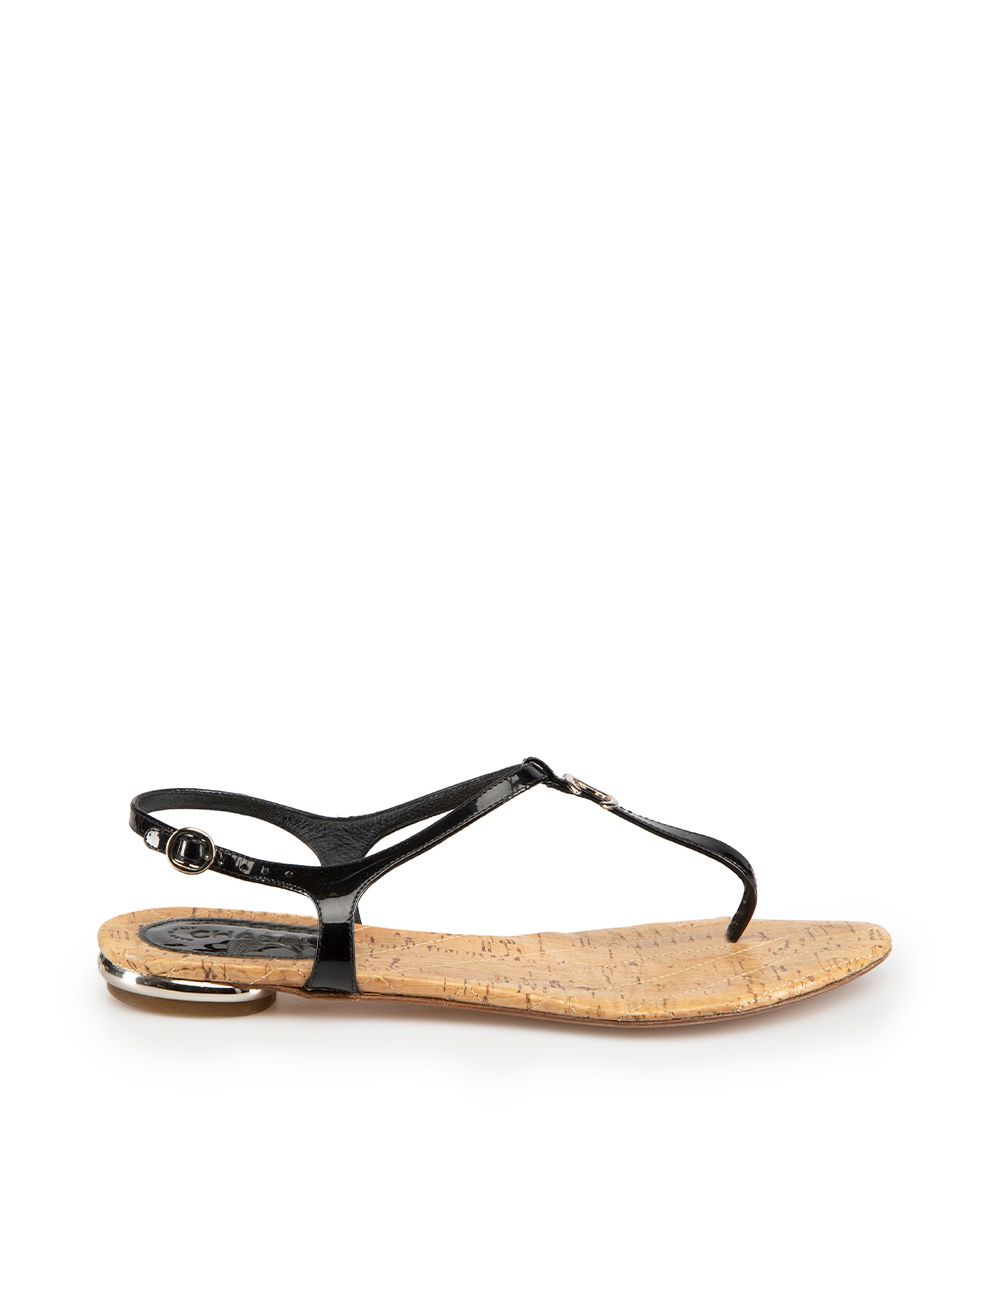 Chanel CC Thong Sandals - Black Sandals, Shoes - CHA400517